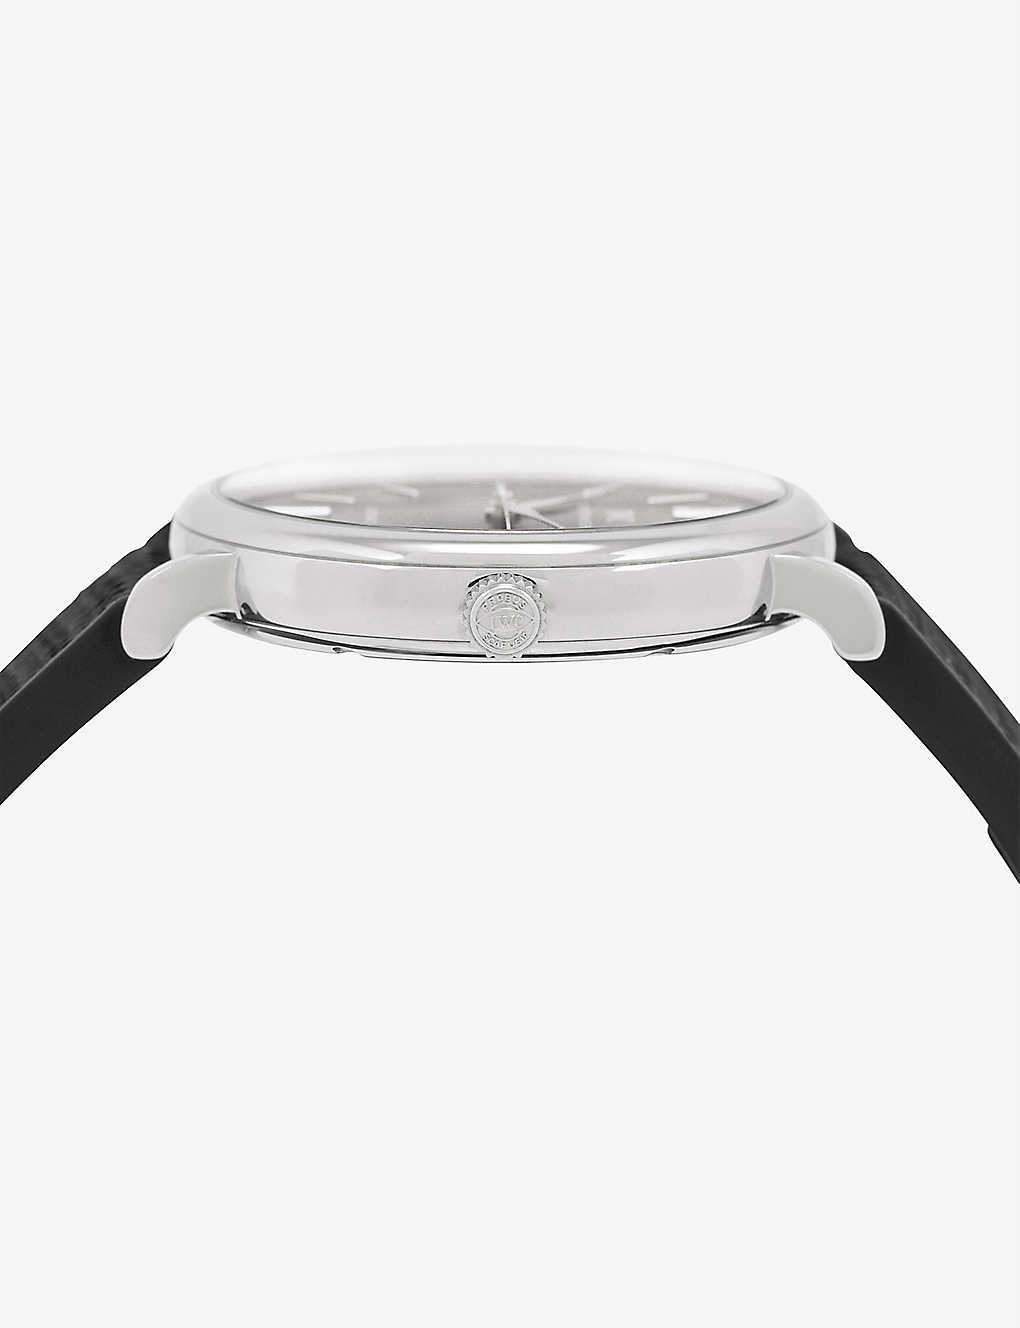 IW356502 Portofino stainless steel automatic watch - 5